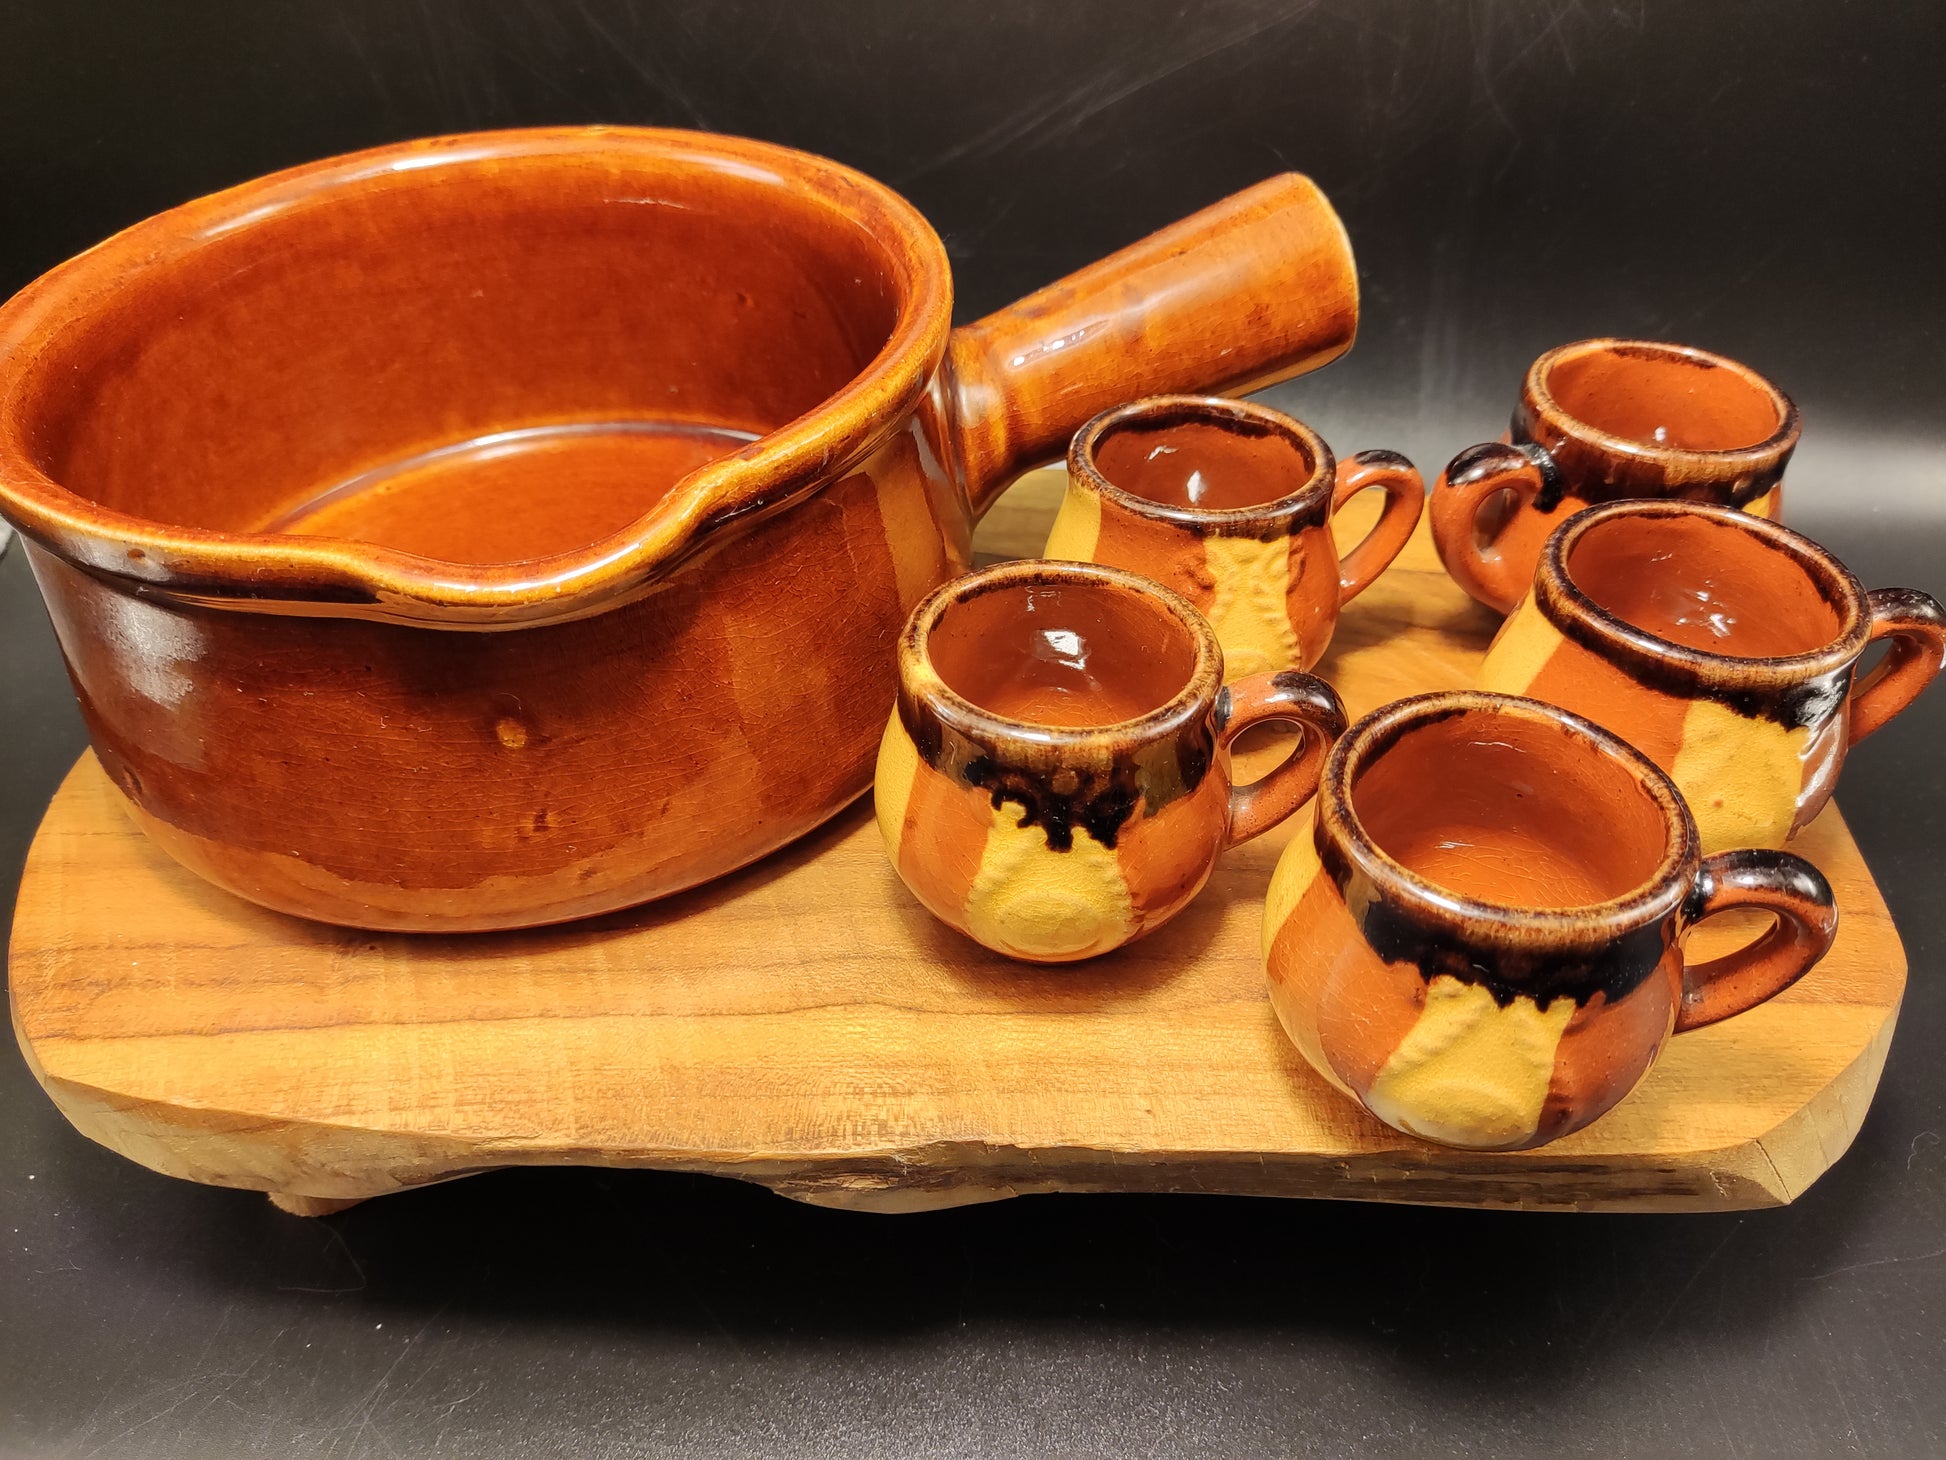 Piket sieraden pint fonduepan kaas (caquelon) met kopjes – IN REVERSE: Antiek, Vintage & Curiosa